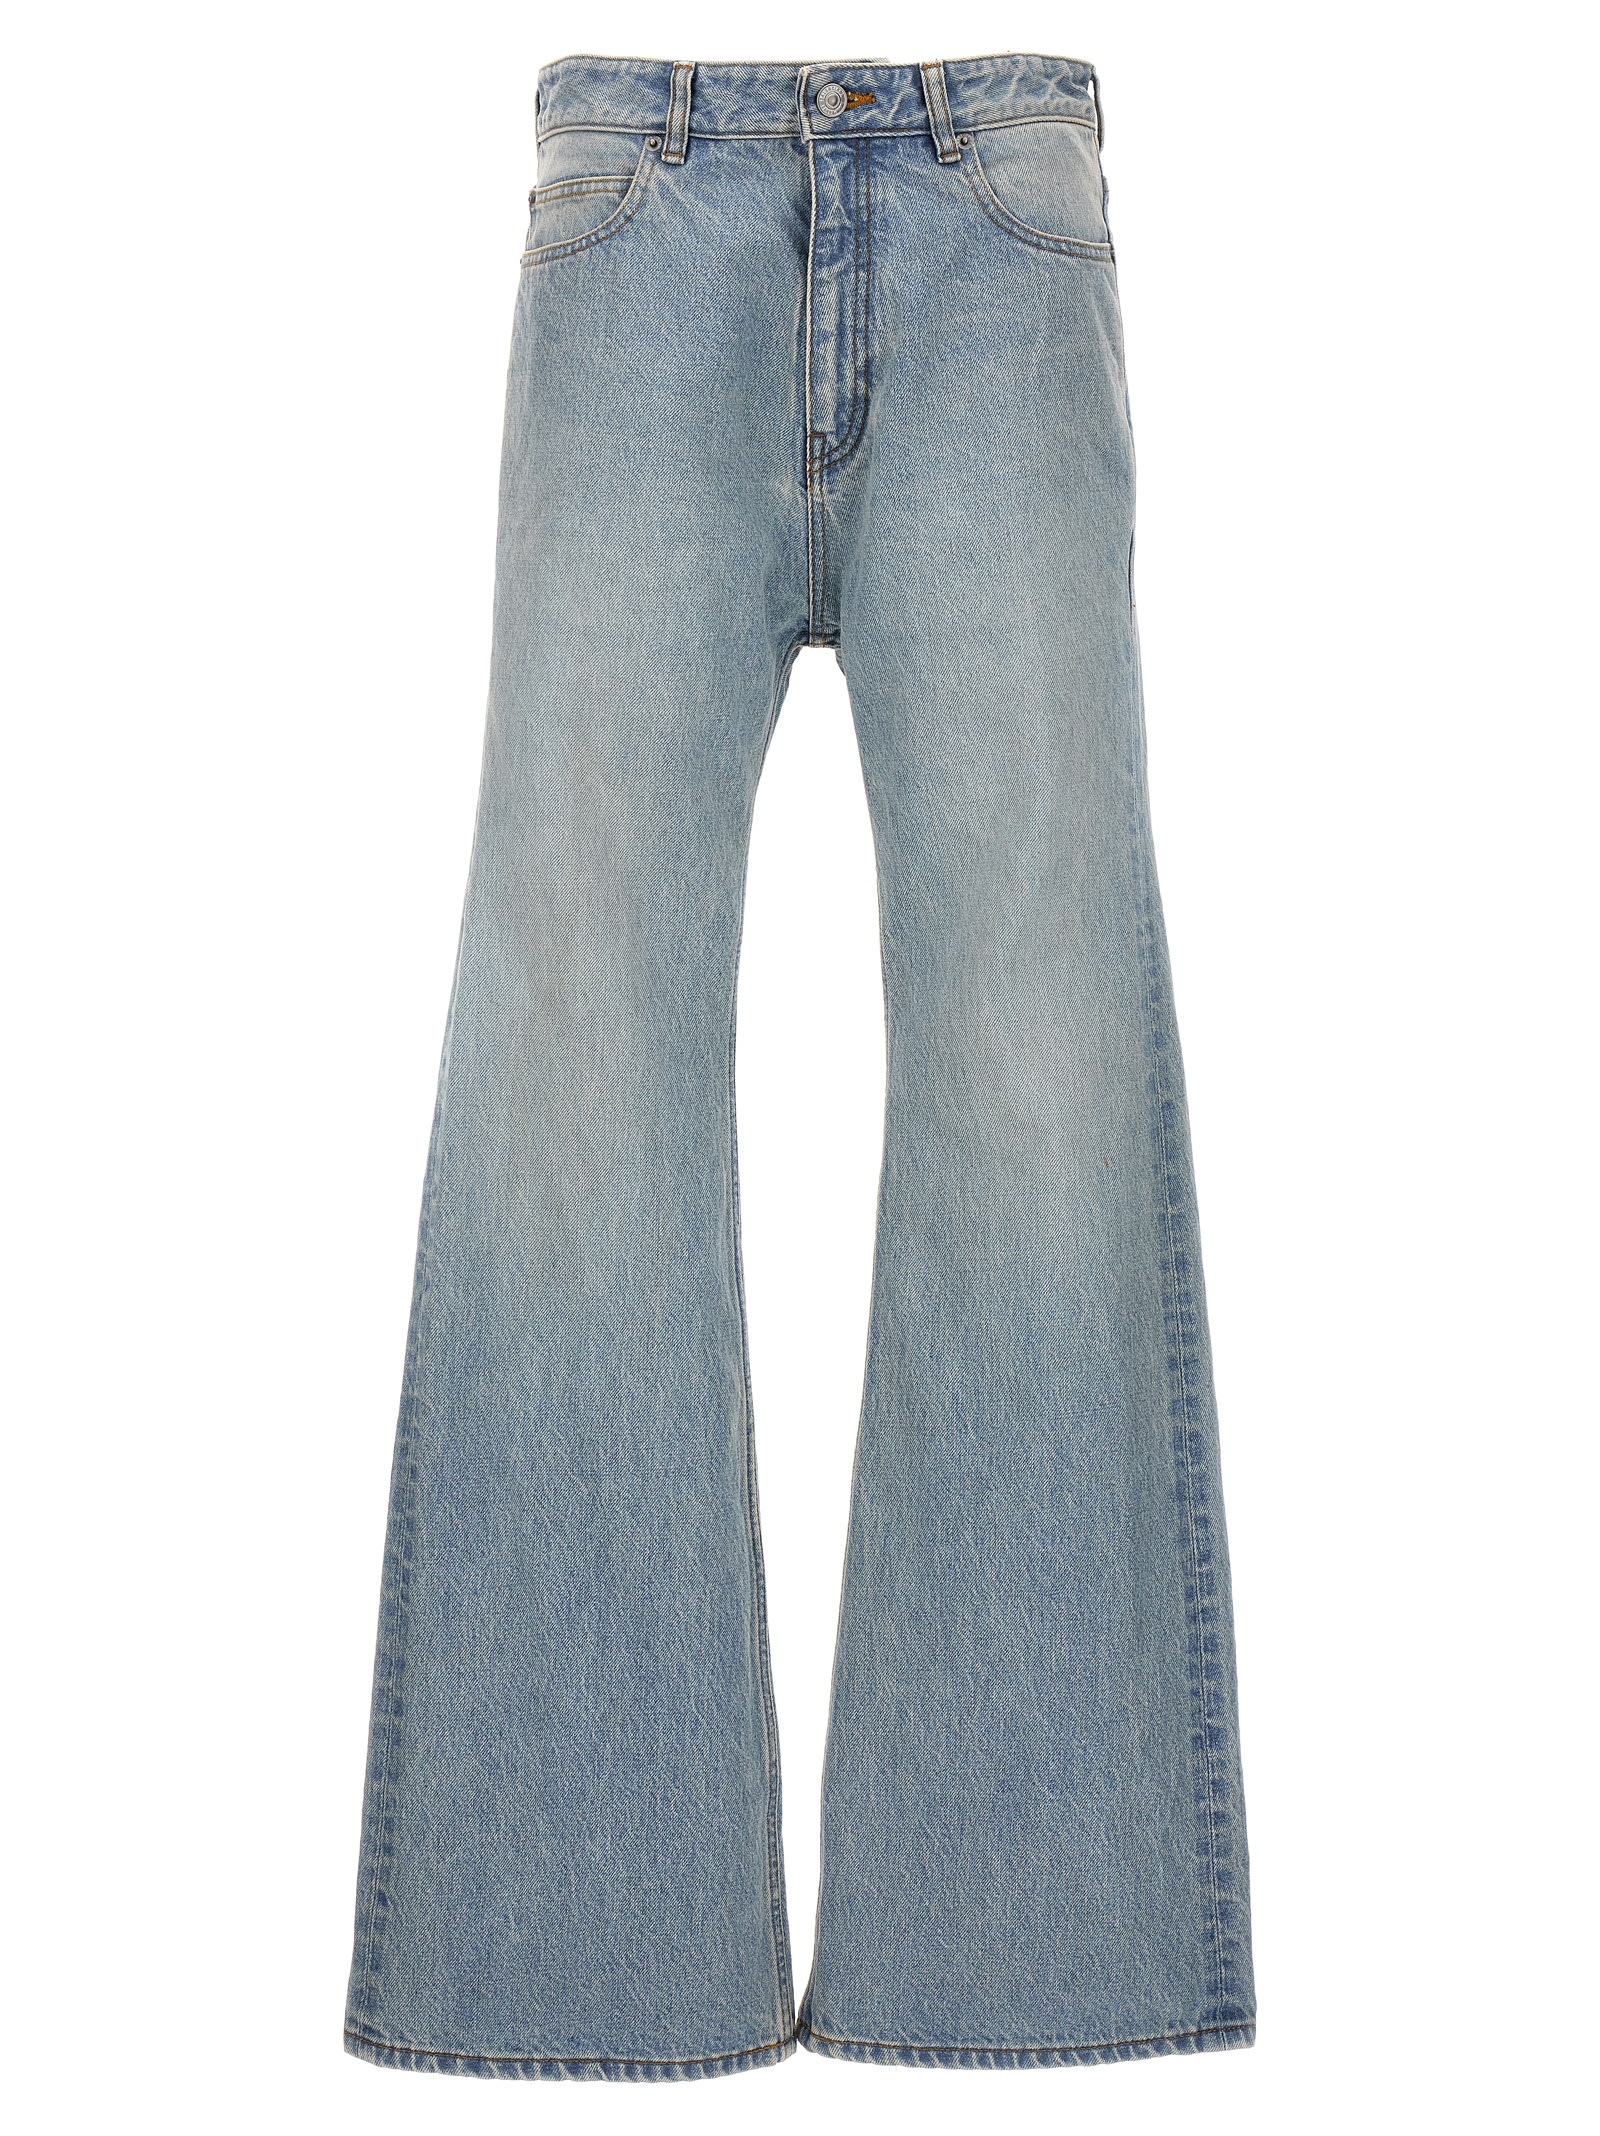 Balenciaga Jeans In Light Indigo/madder